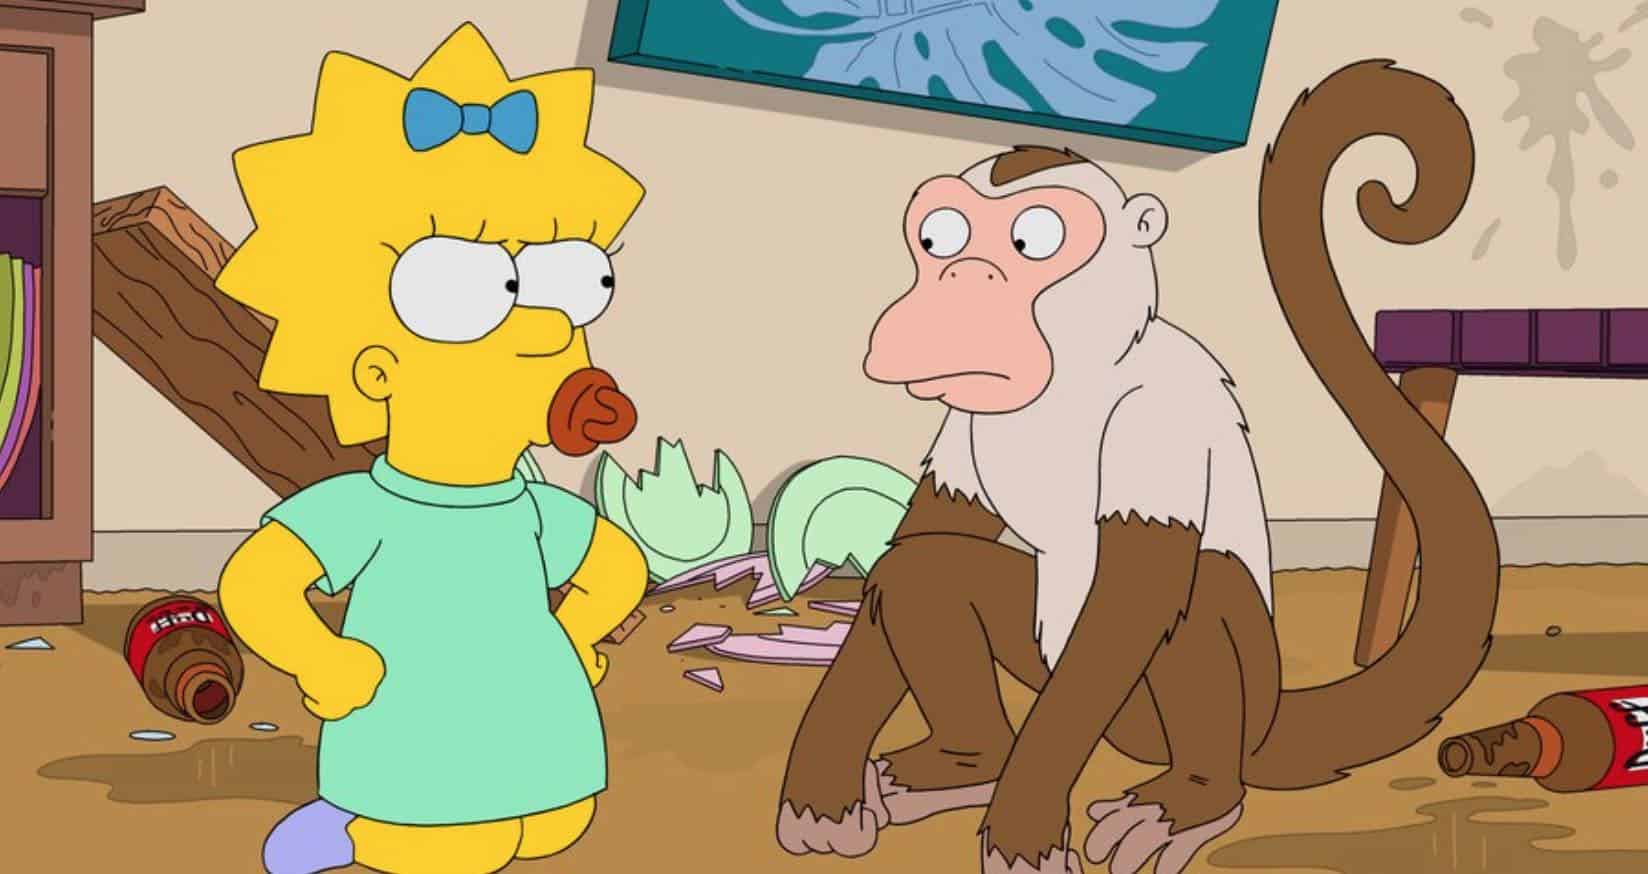 The Simpsons meet Pura Vida